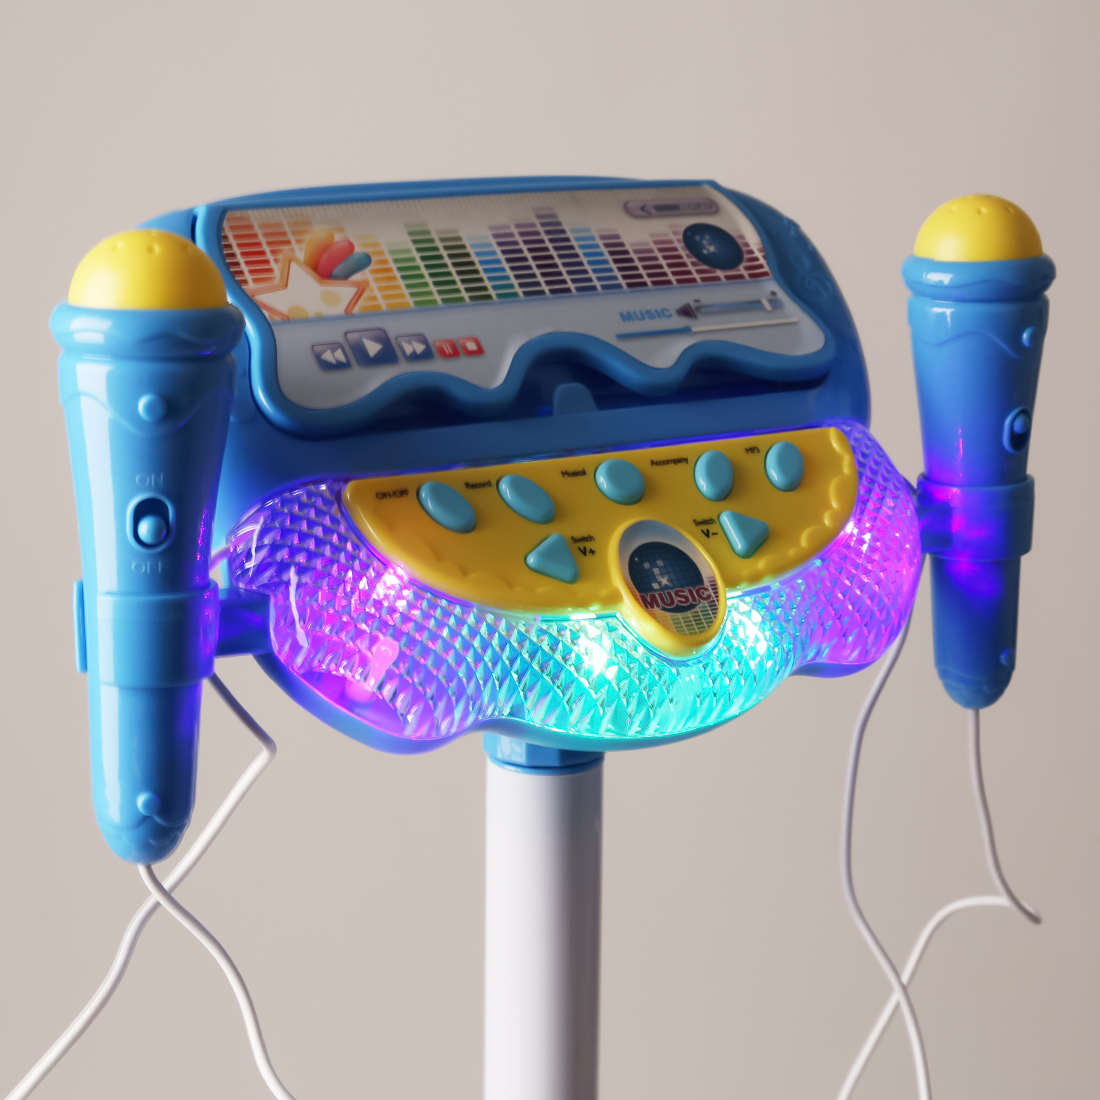 iTECHOR Children Karaoke Song Machine Microphone Stand & Lights Toy Karaoke Players Home Audio & Video- Blue